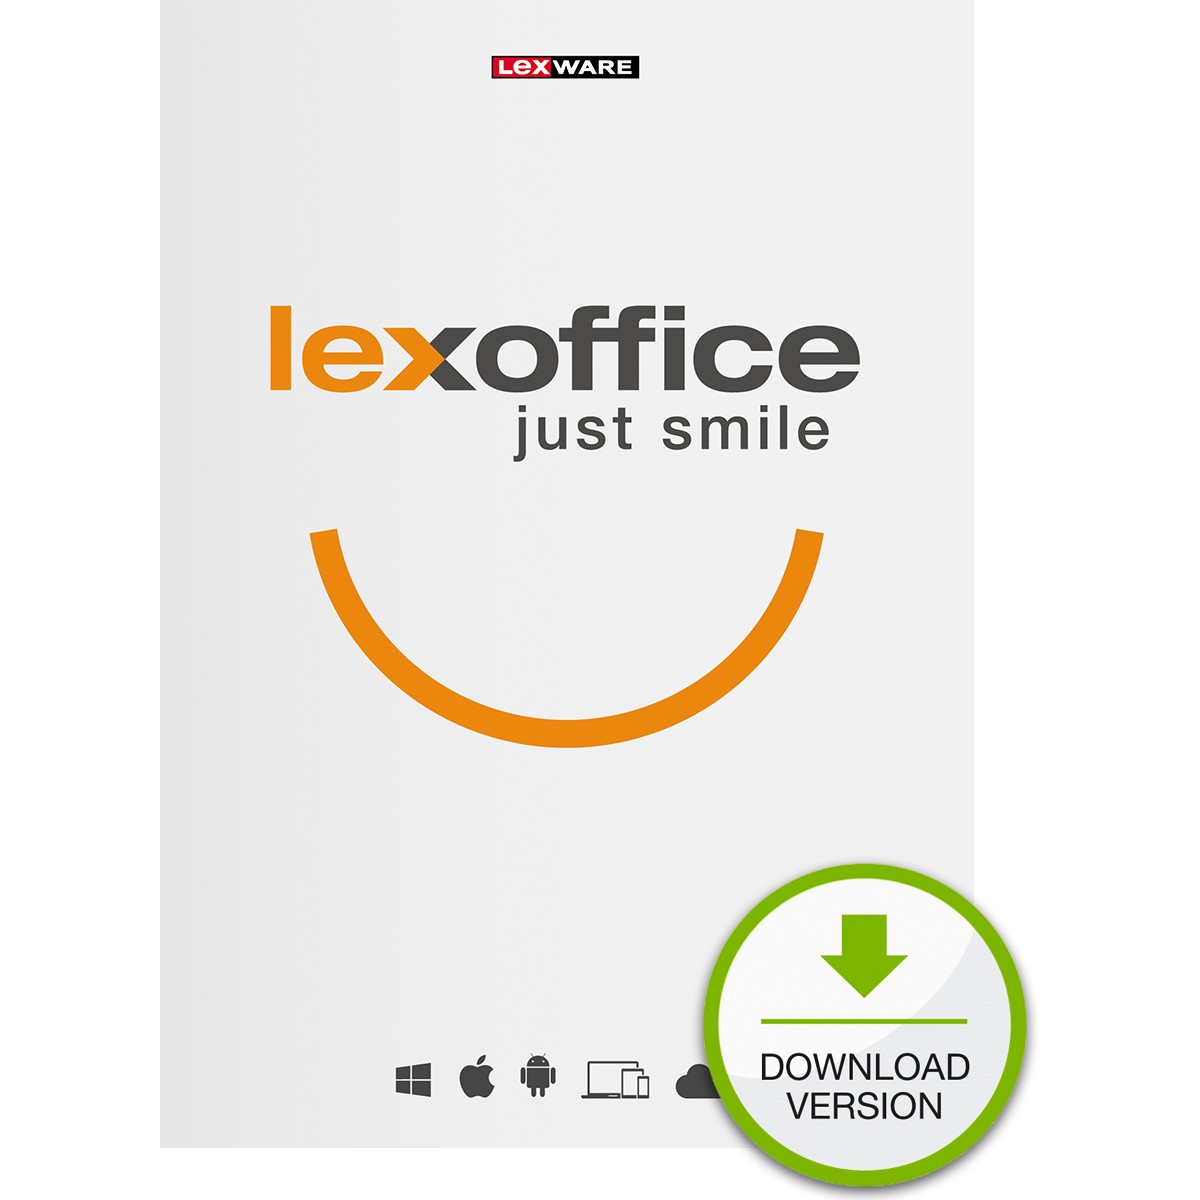 Lexware lexoffice XL 1 Year ESD-DownloadESD